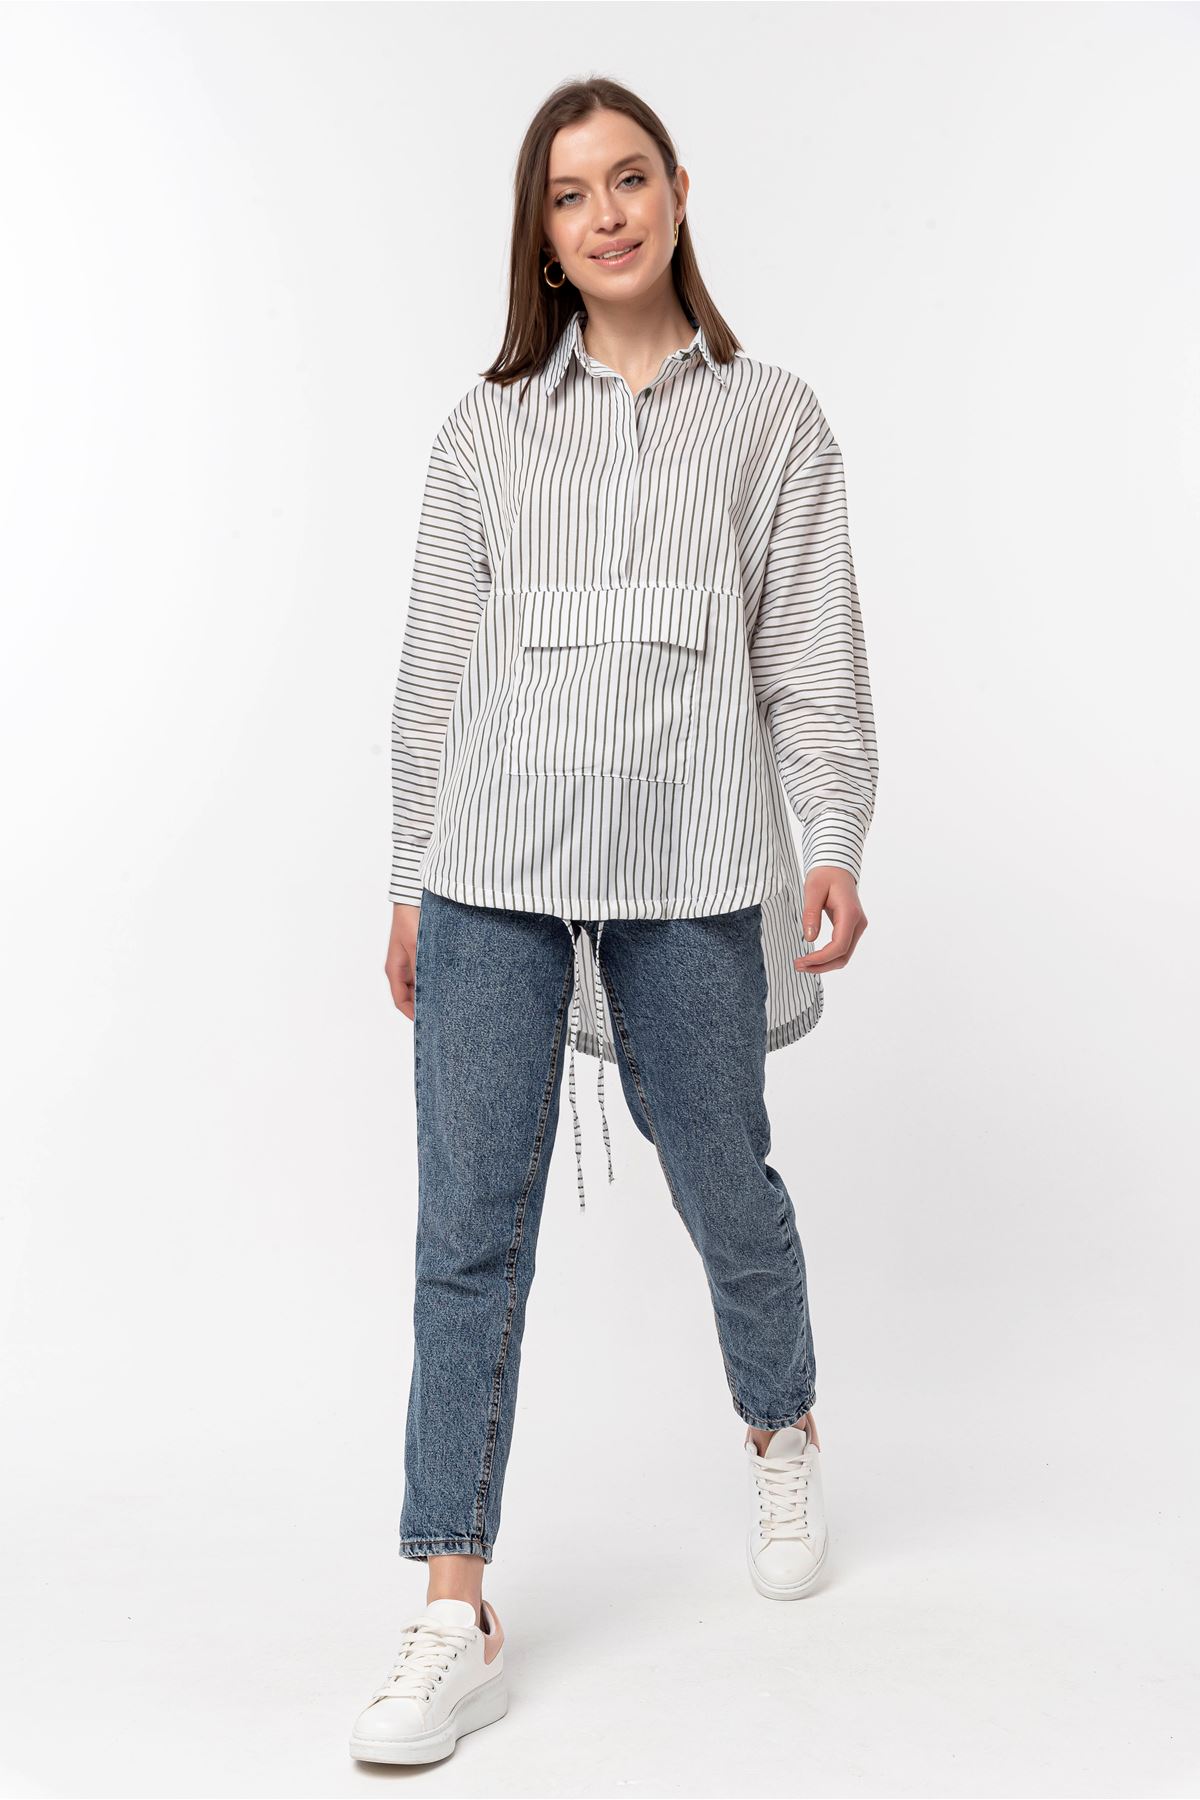 Satin Fabric Long Sleeve Oversize Striped Women'S Shirt - Khaki 